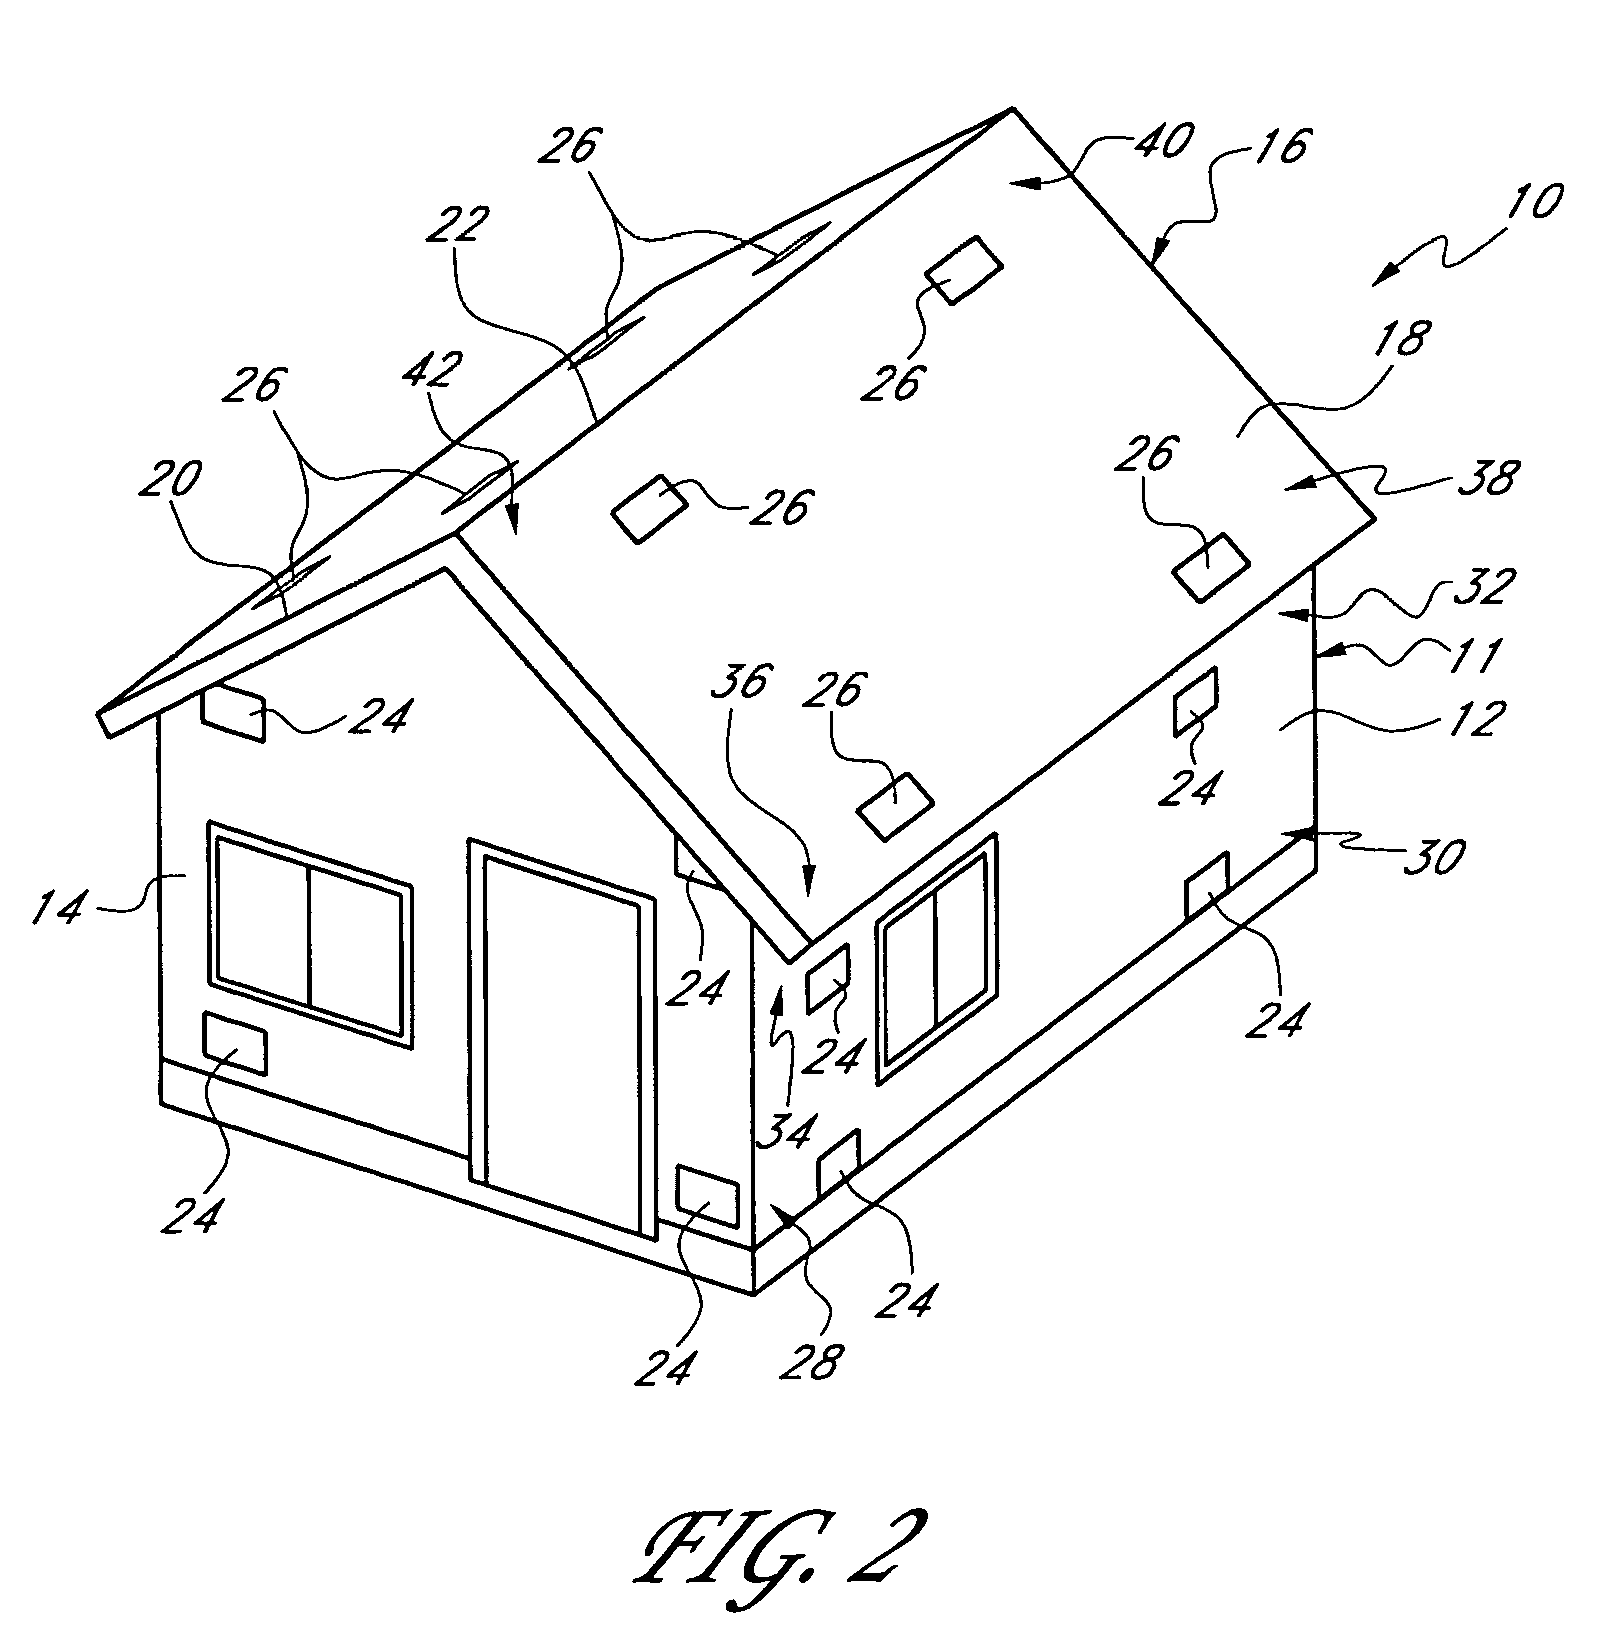 Building with improved vent arrangement